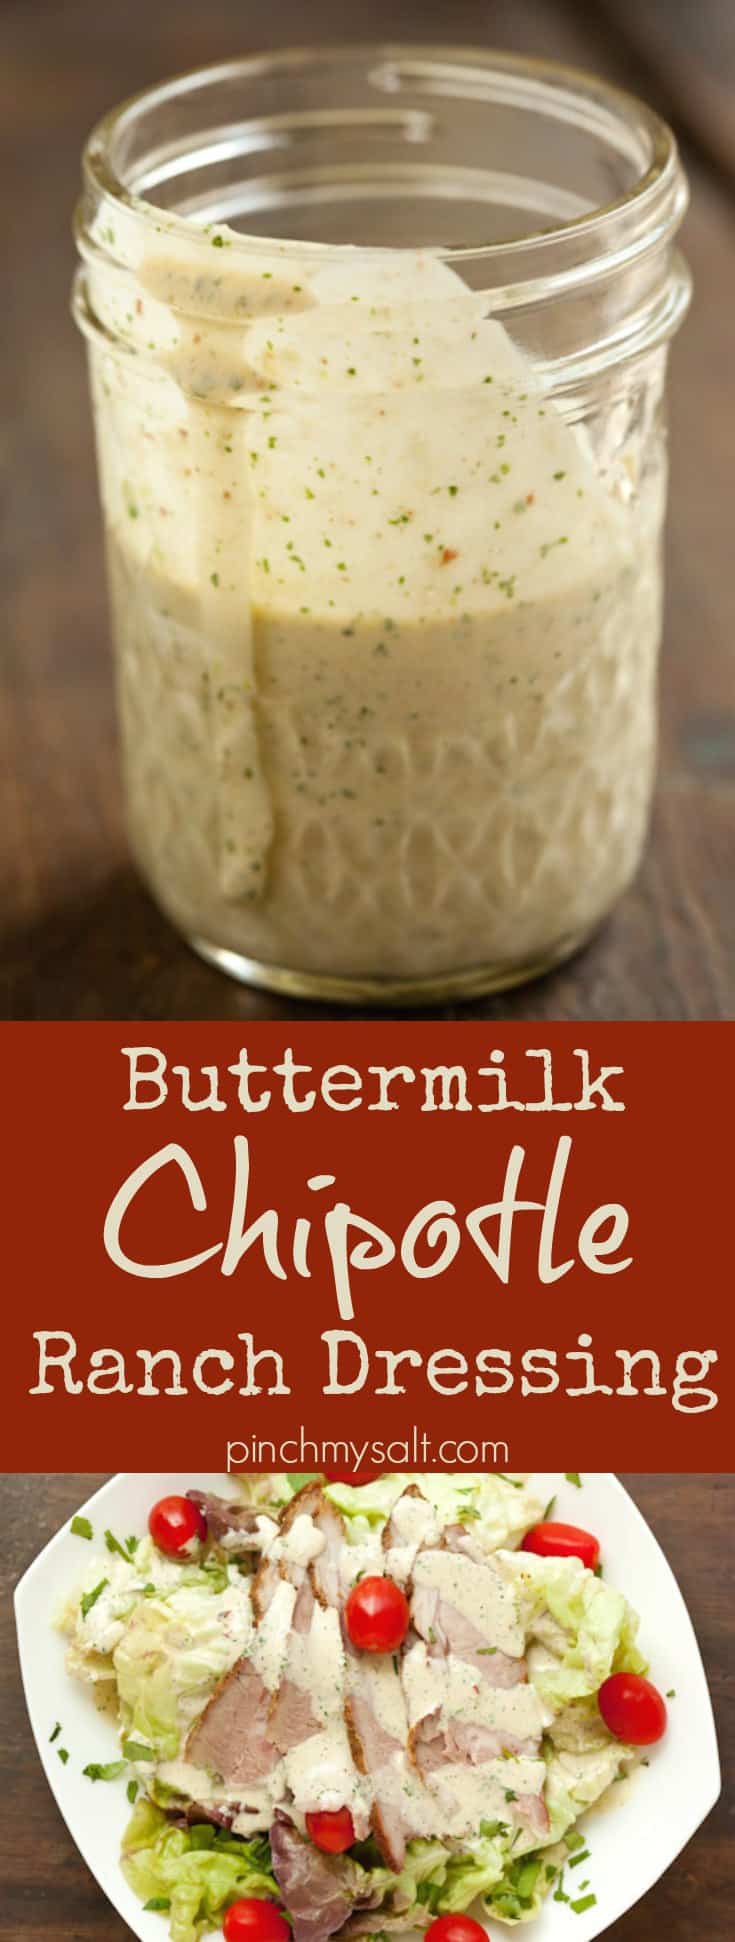 Buttermilk Chipotle Ranch Dressing Recipe